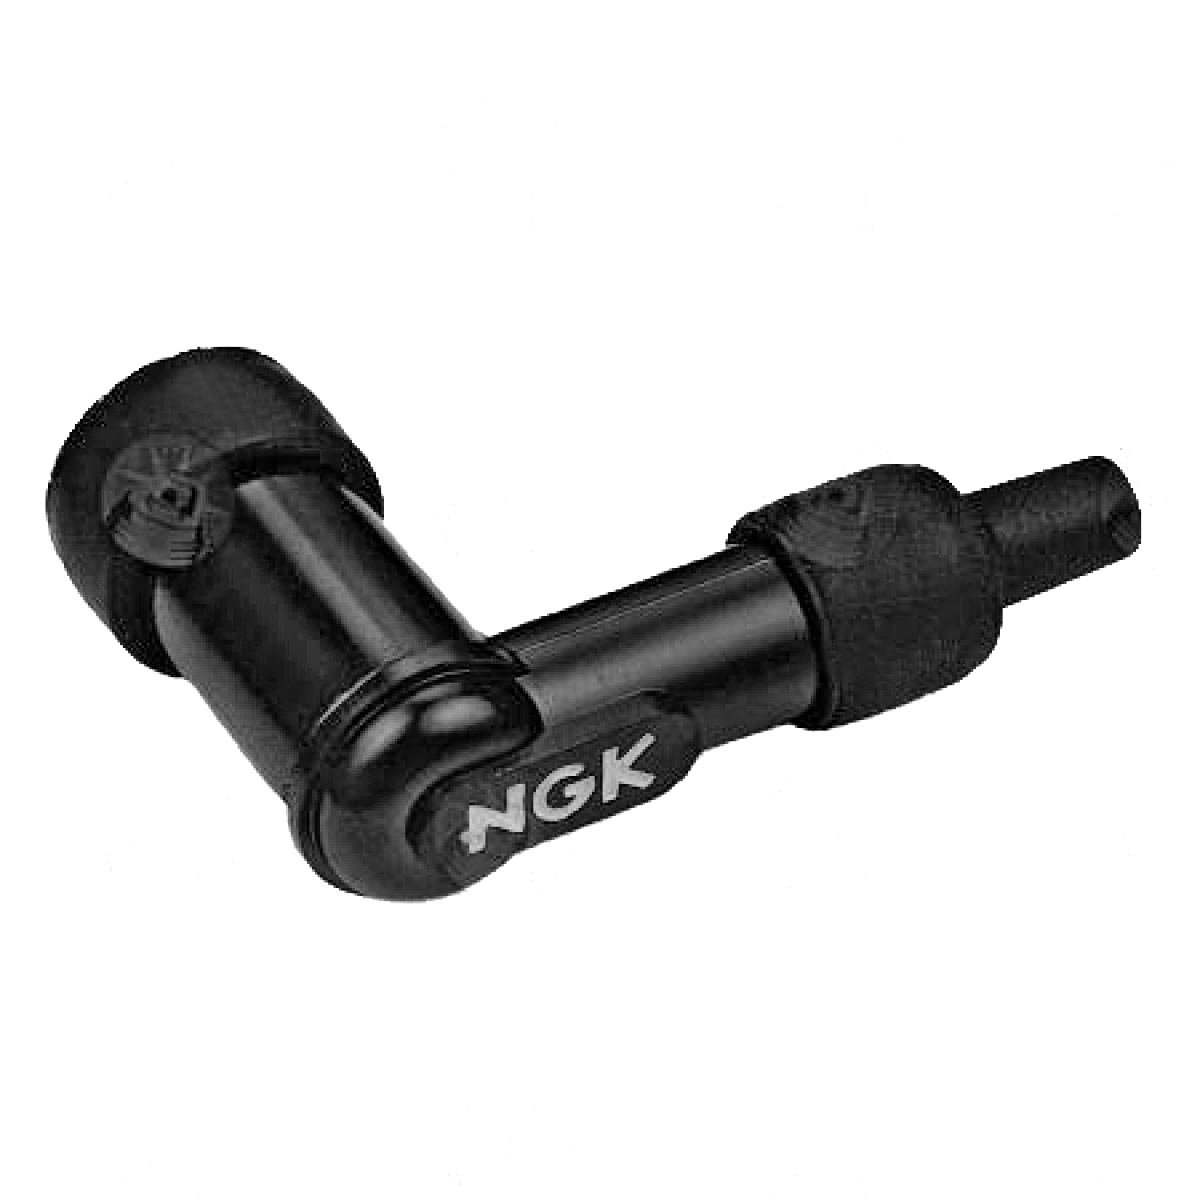 NGK Spark Plug Connector  LD05F, 90 Degrees, Black